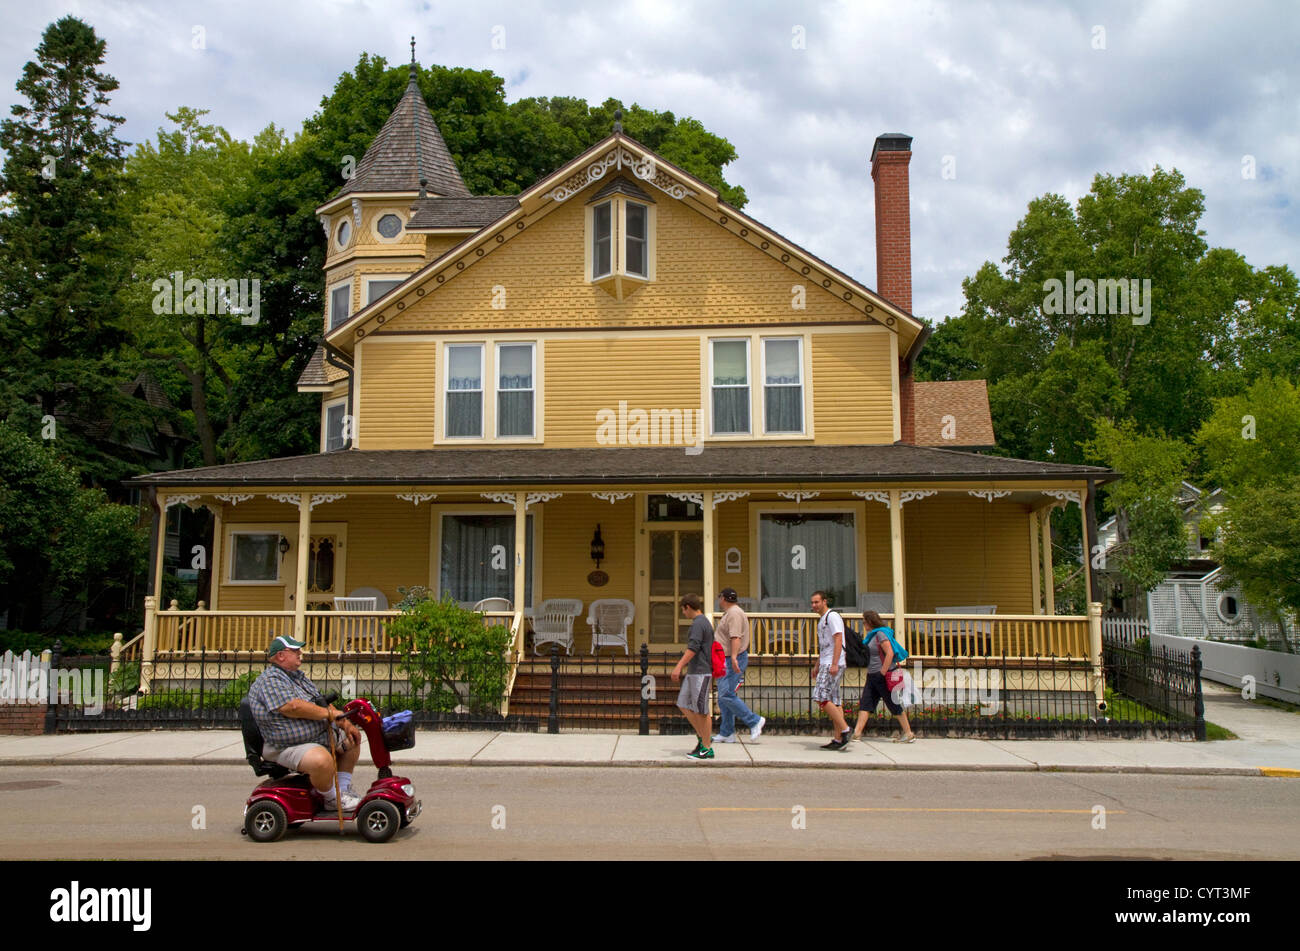 Historic home on Mackinac Island located in Lake Huron, Michigan, USA. Stock Photo